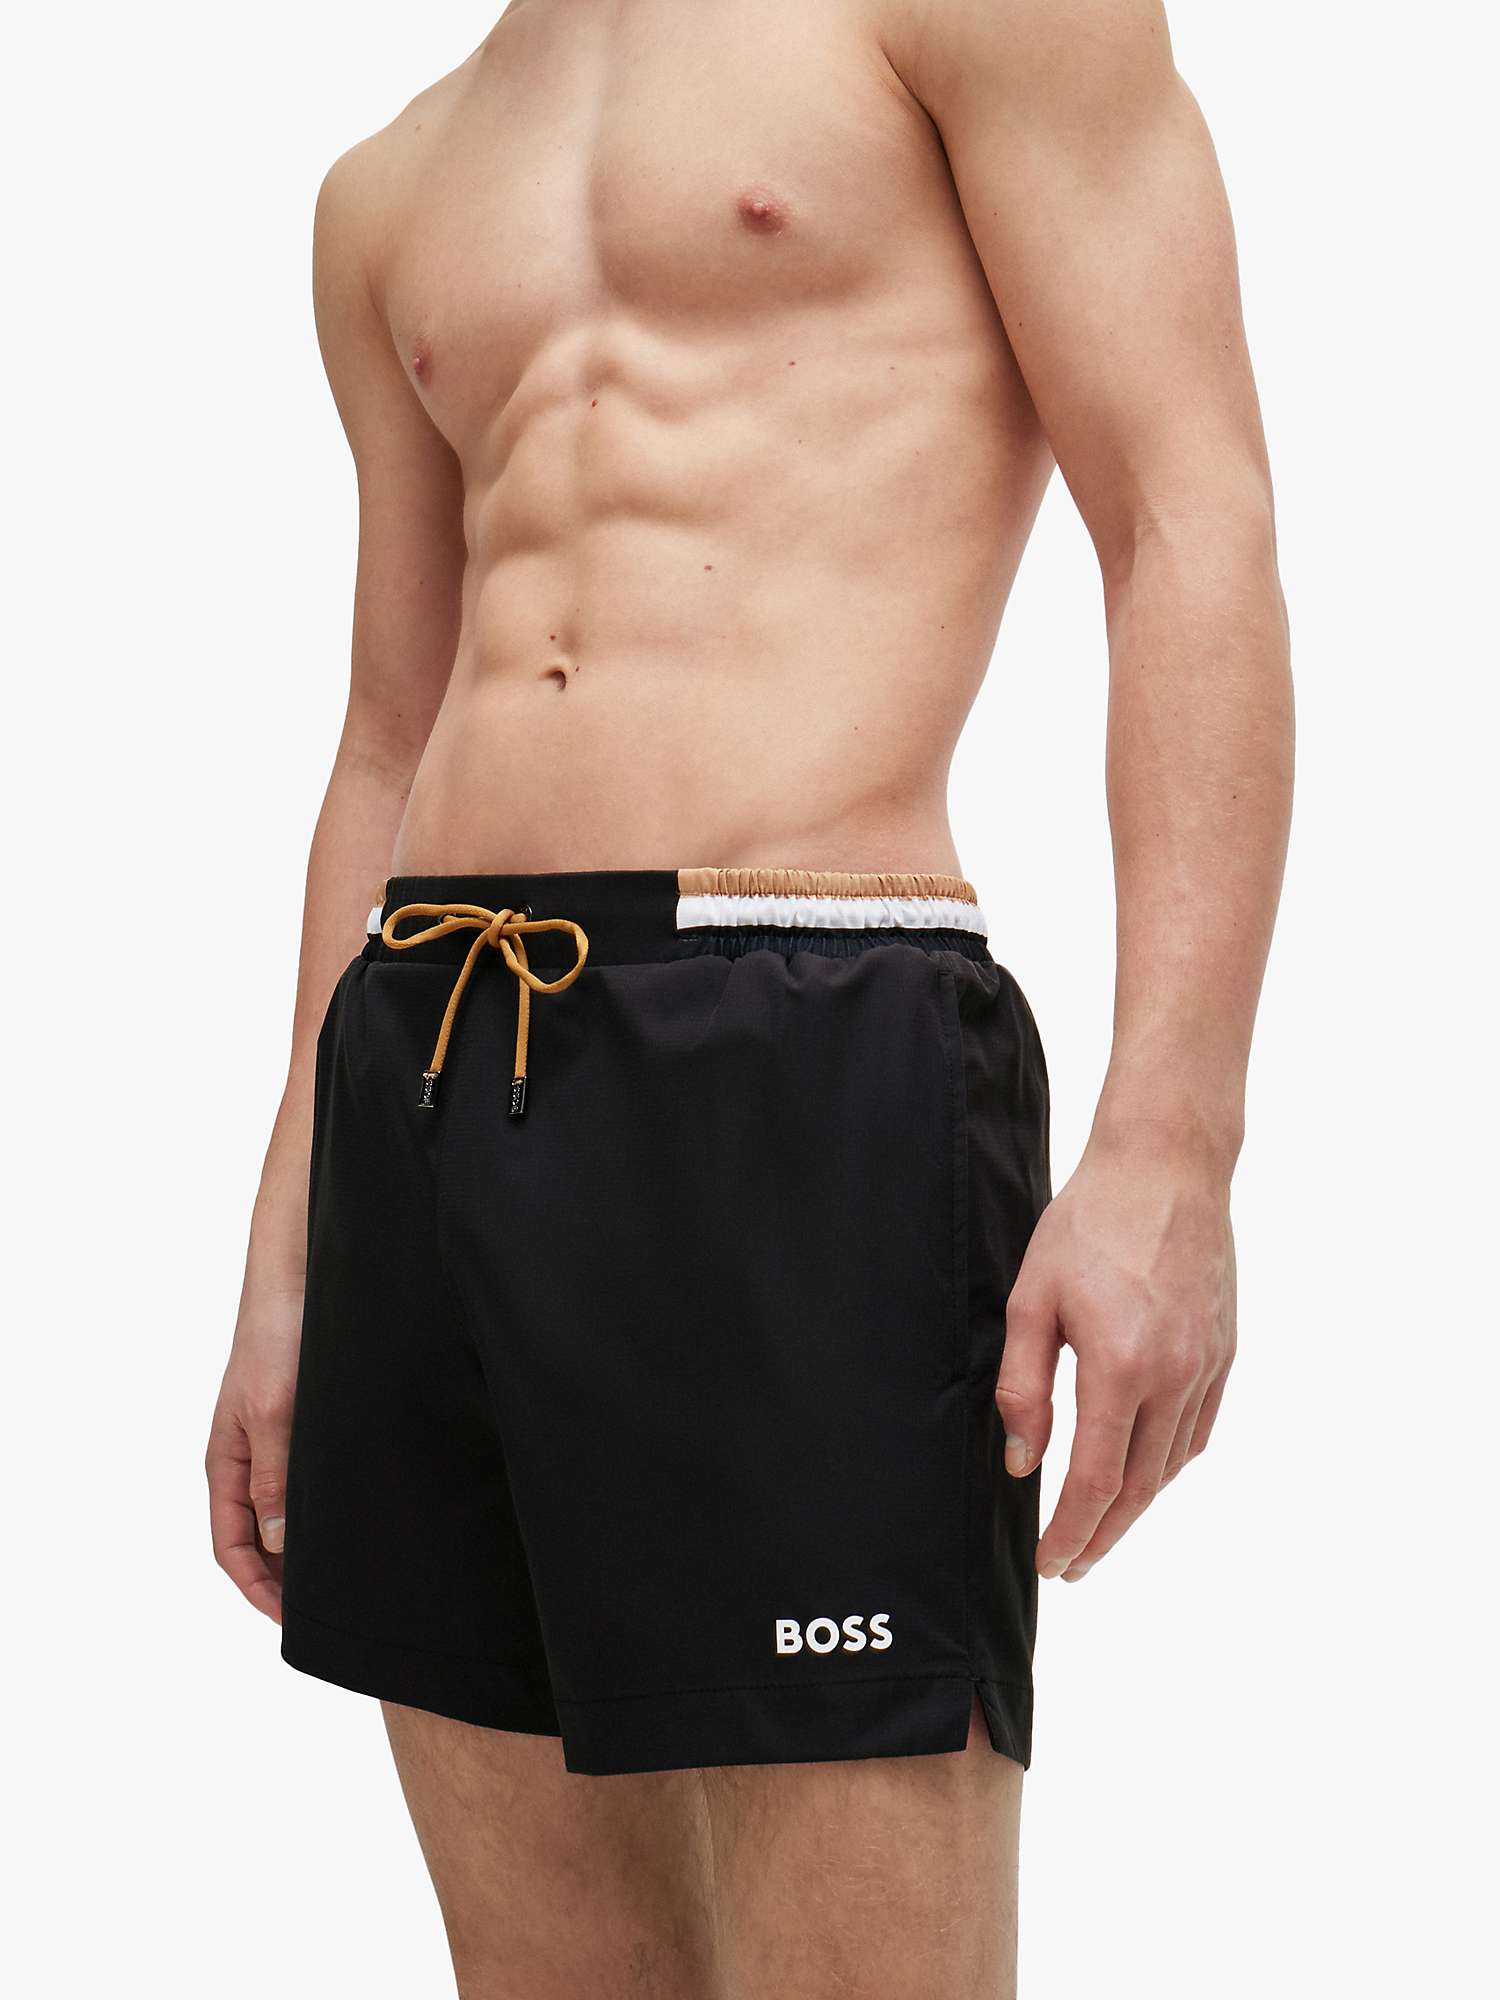 Buy BOSS Atoll Swim Shorts, Black Online at johnlewis.com